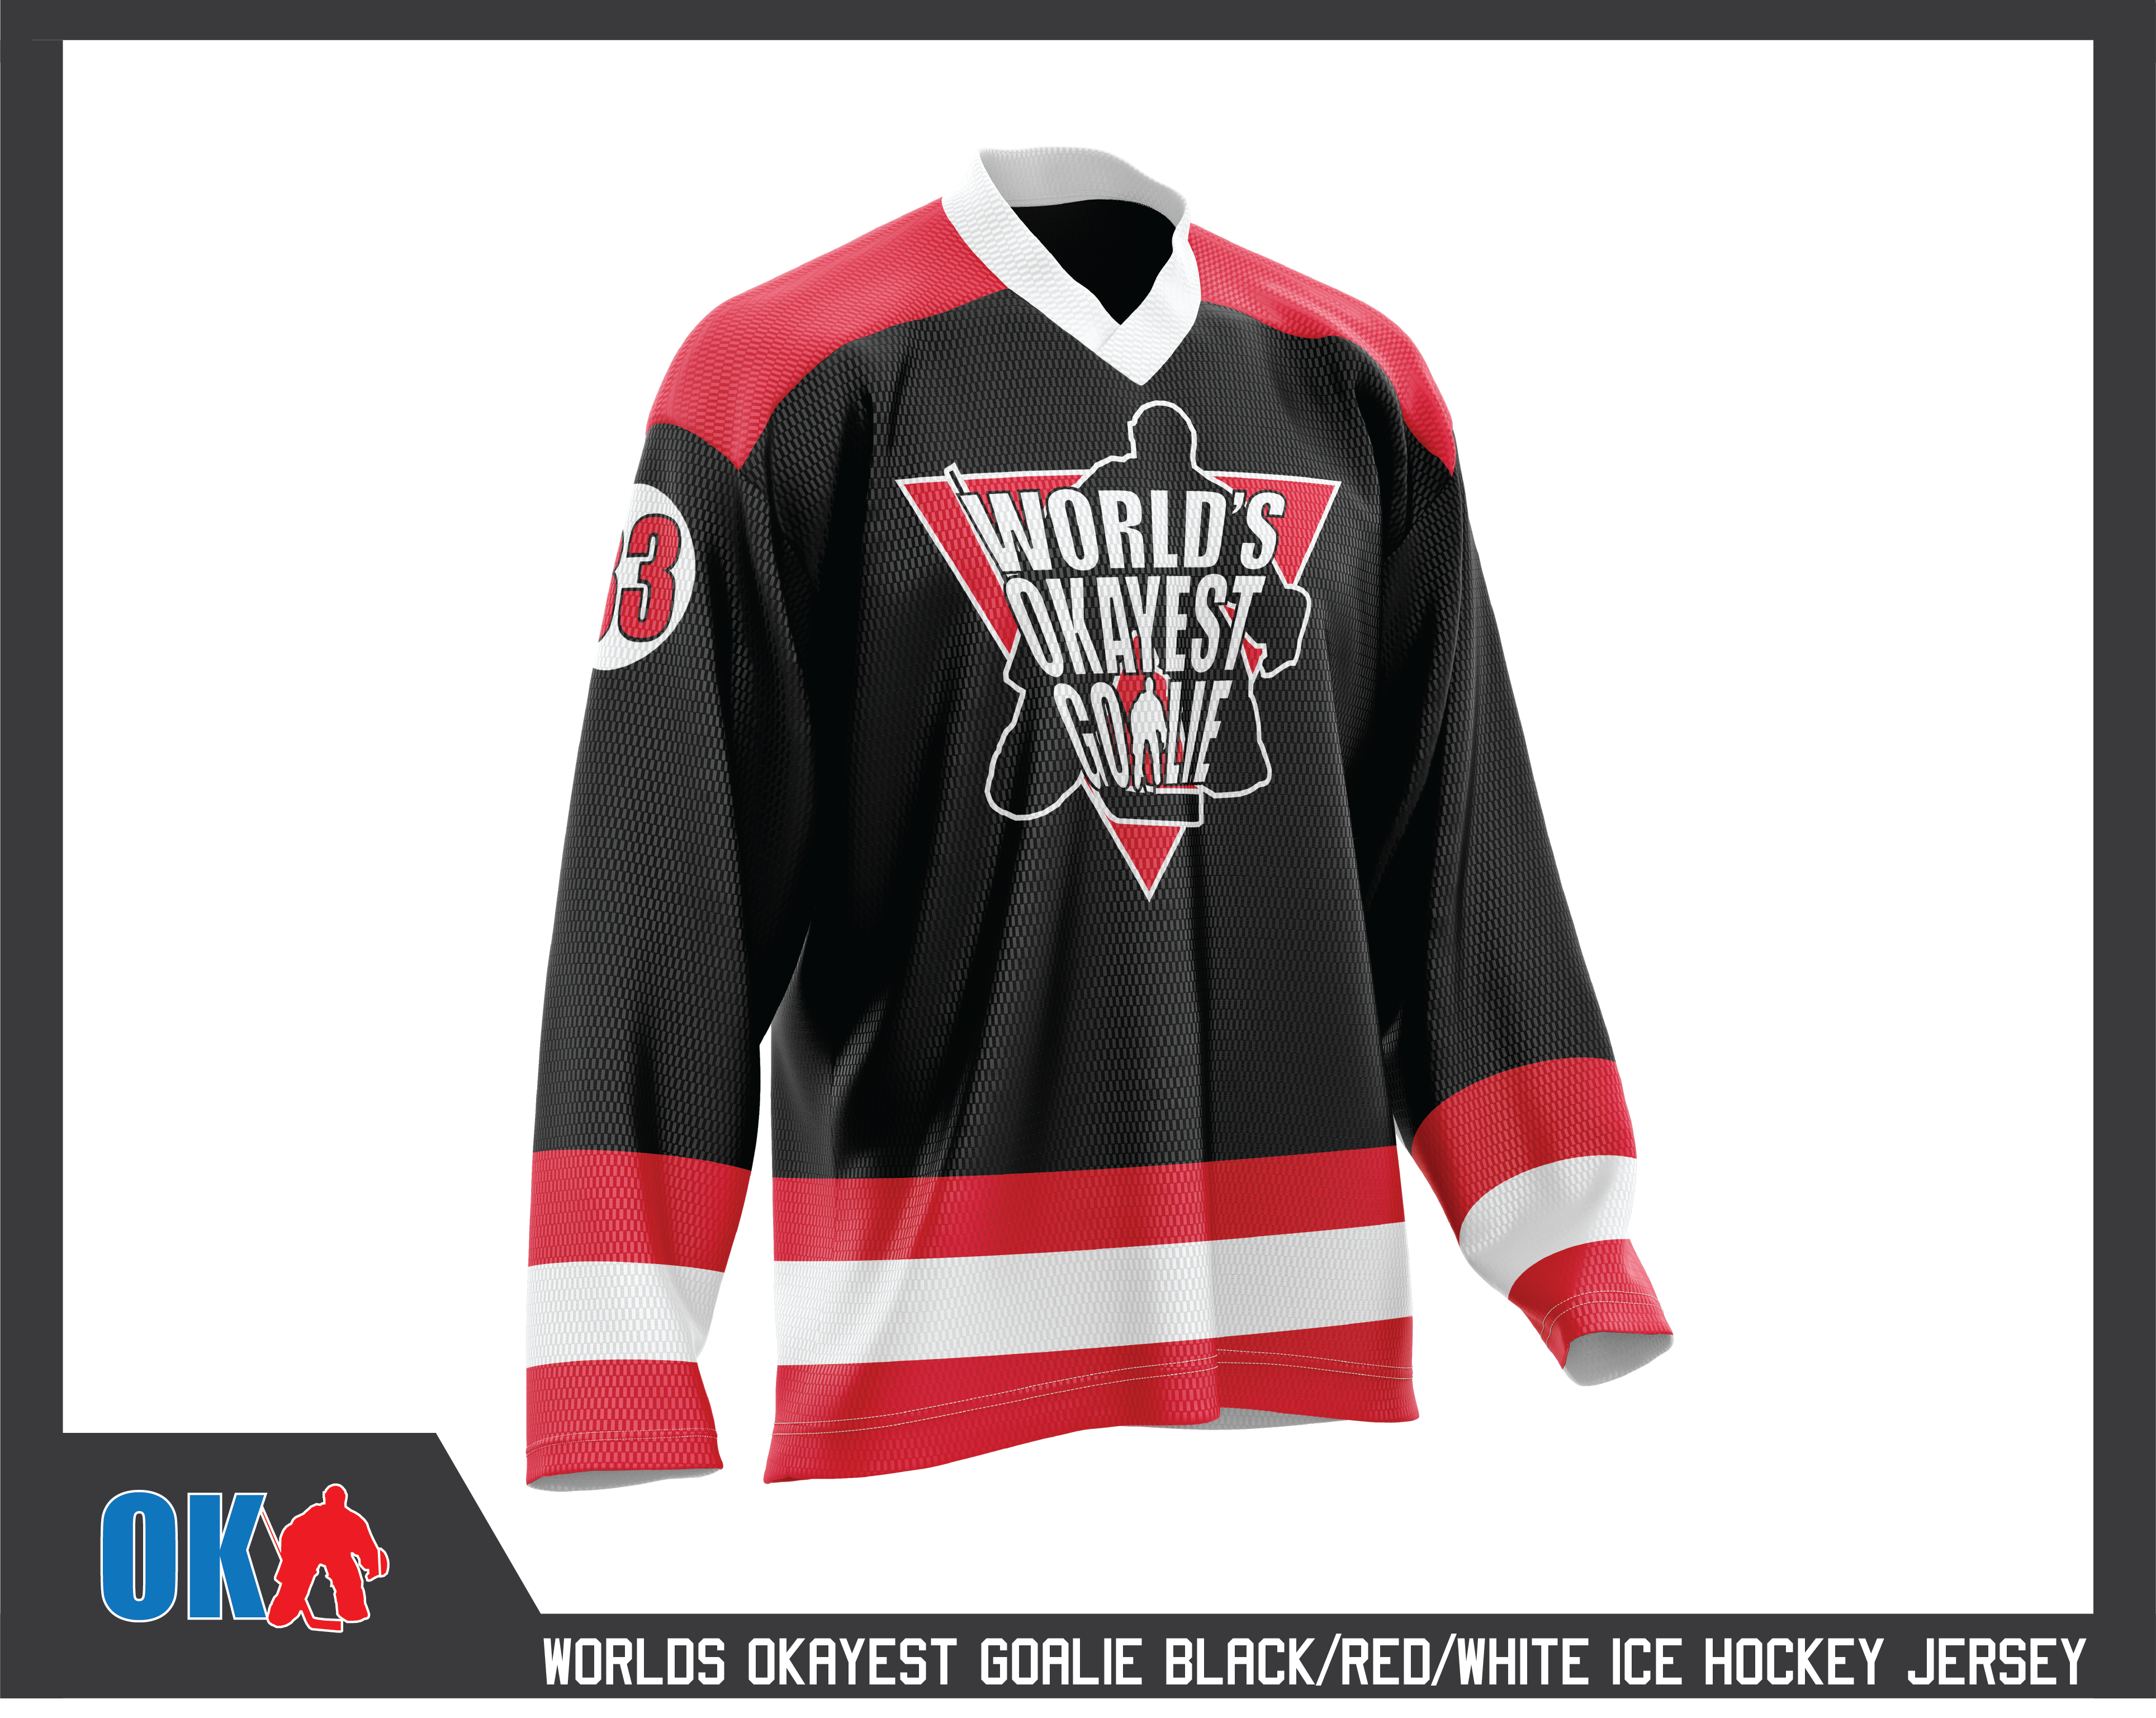 Custom Red Black-White Hockey Jersey Men's Size:XL